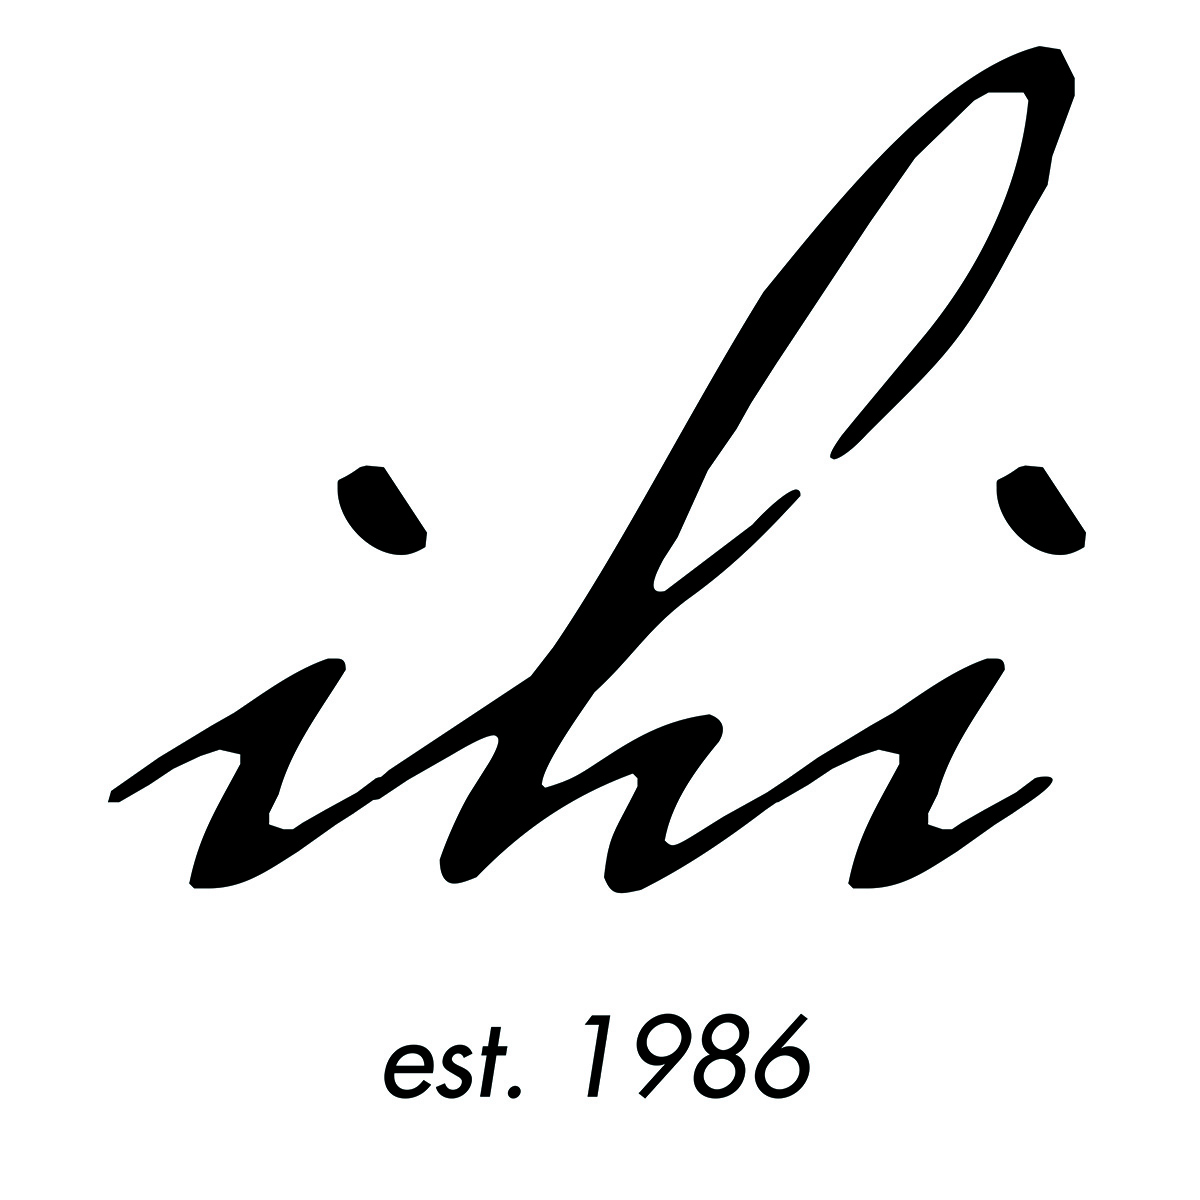 nextgen dallas ihi logo